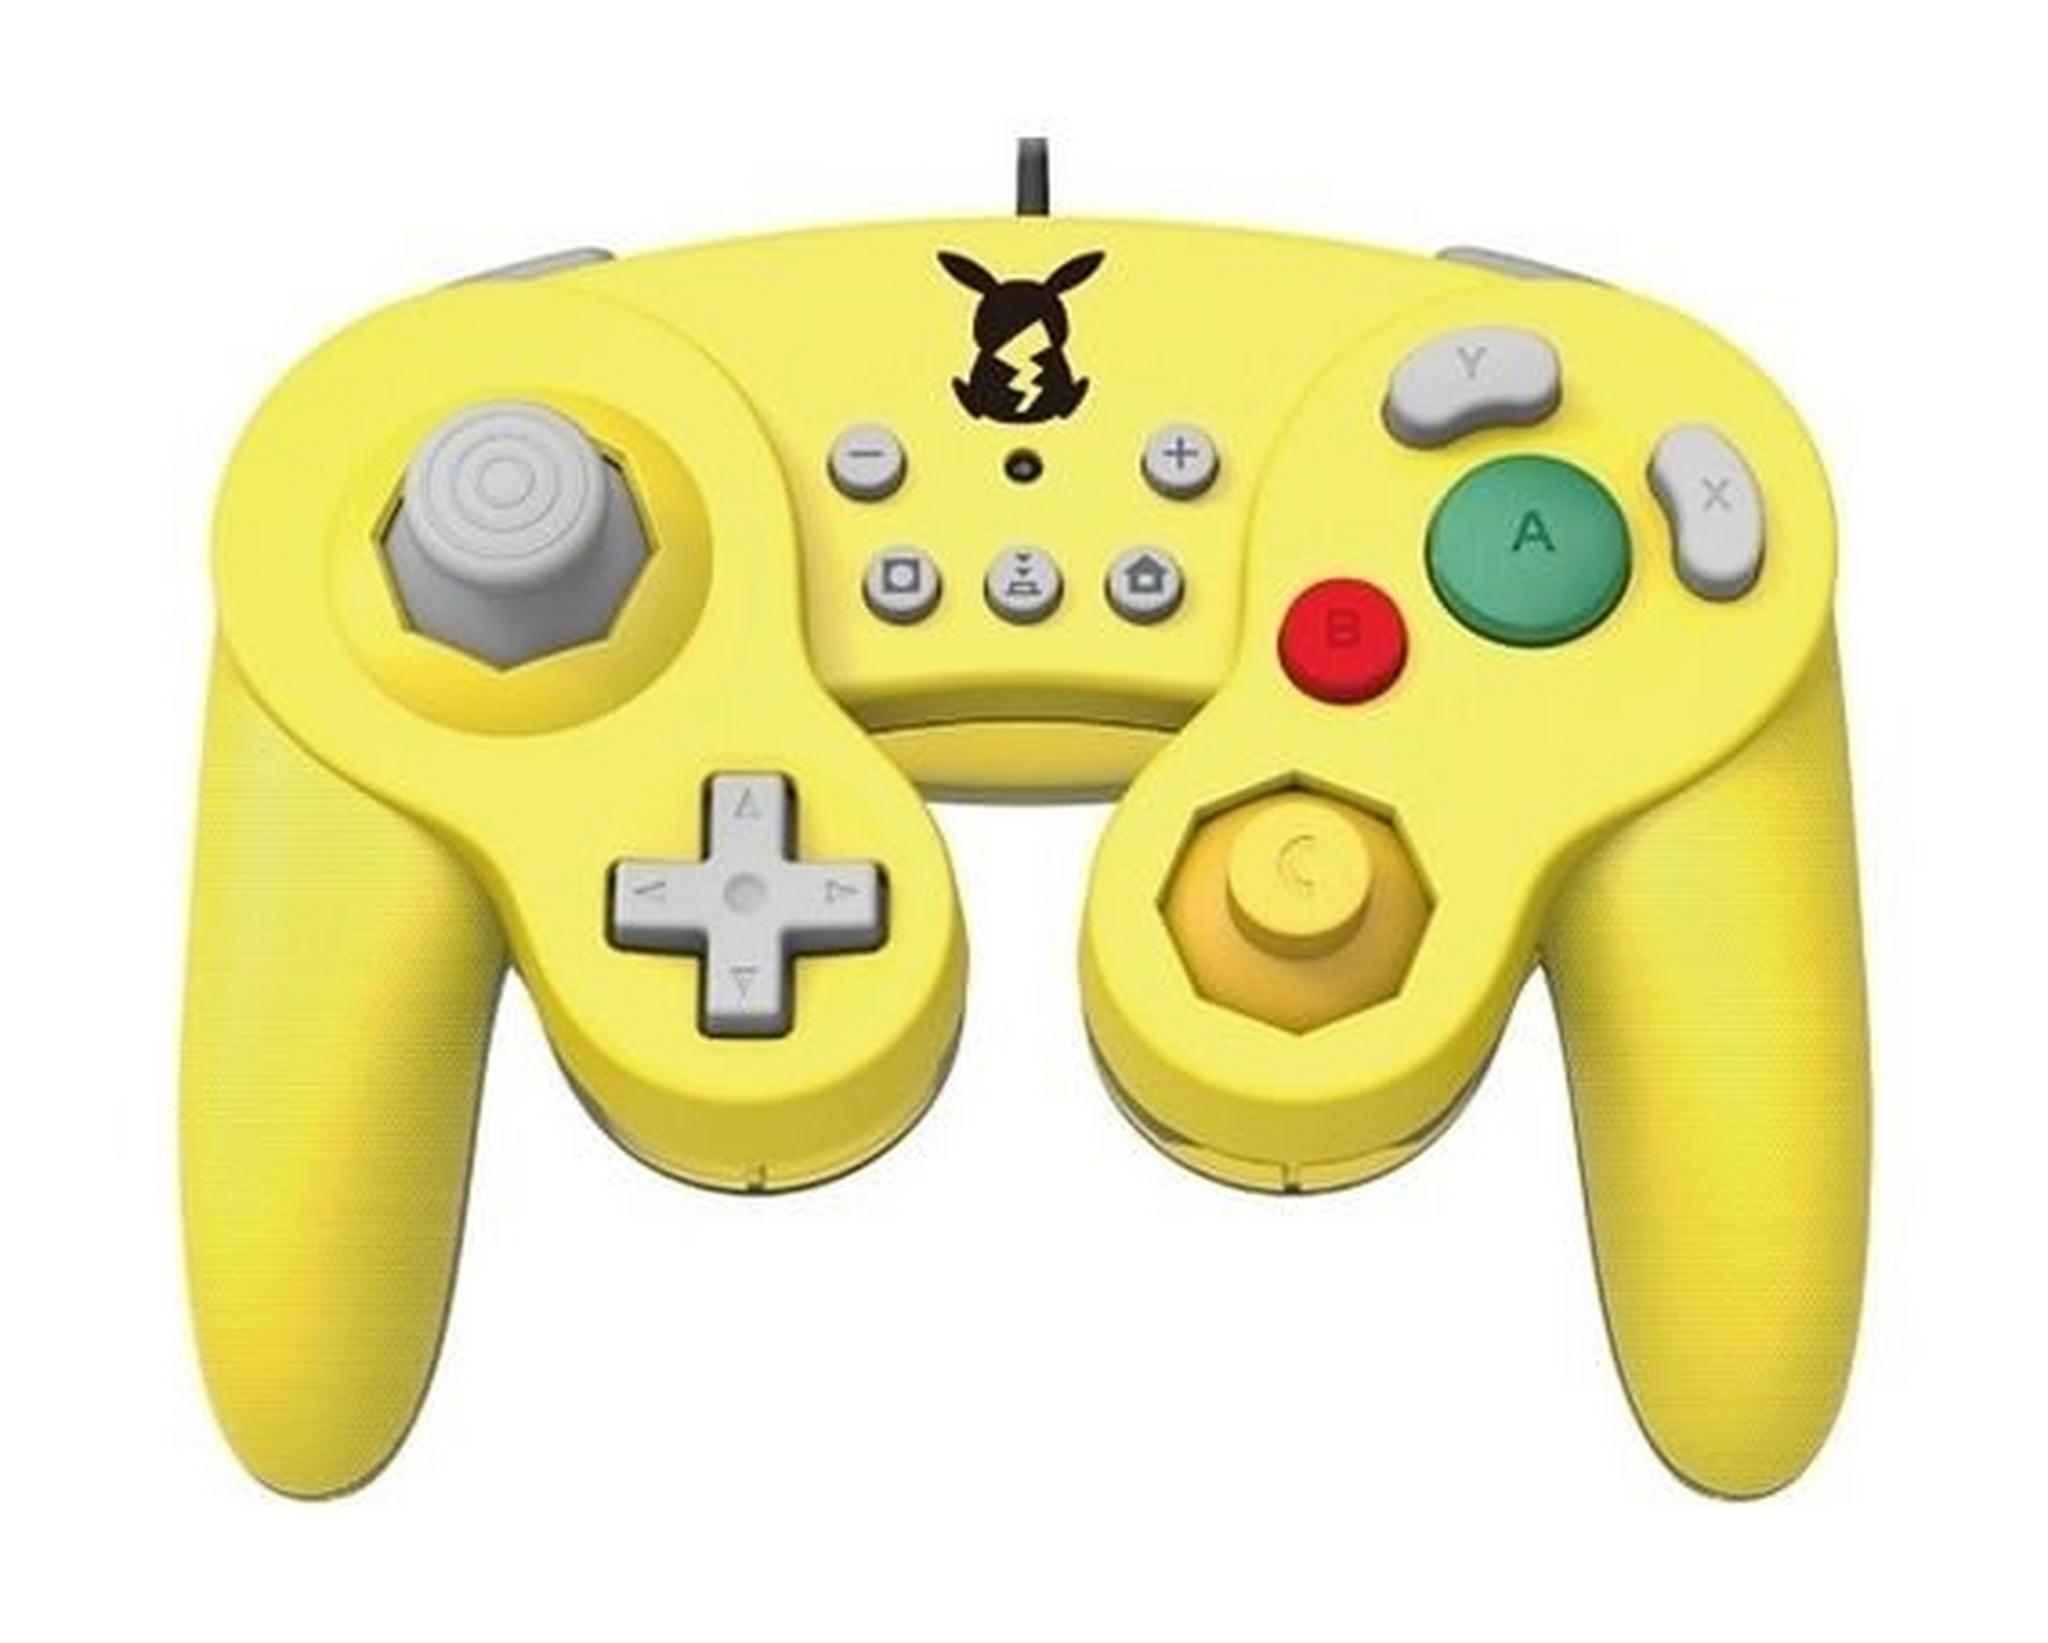 Hori Nintendo Switch: Super Smash Bros GamePad - Pikachu